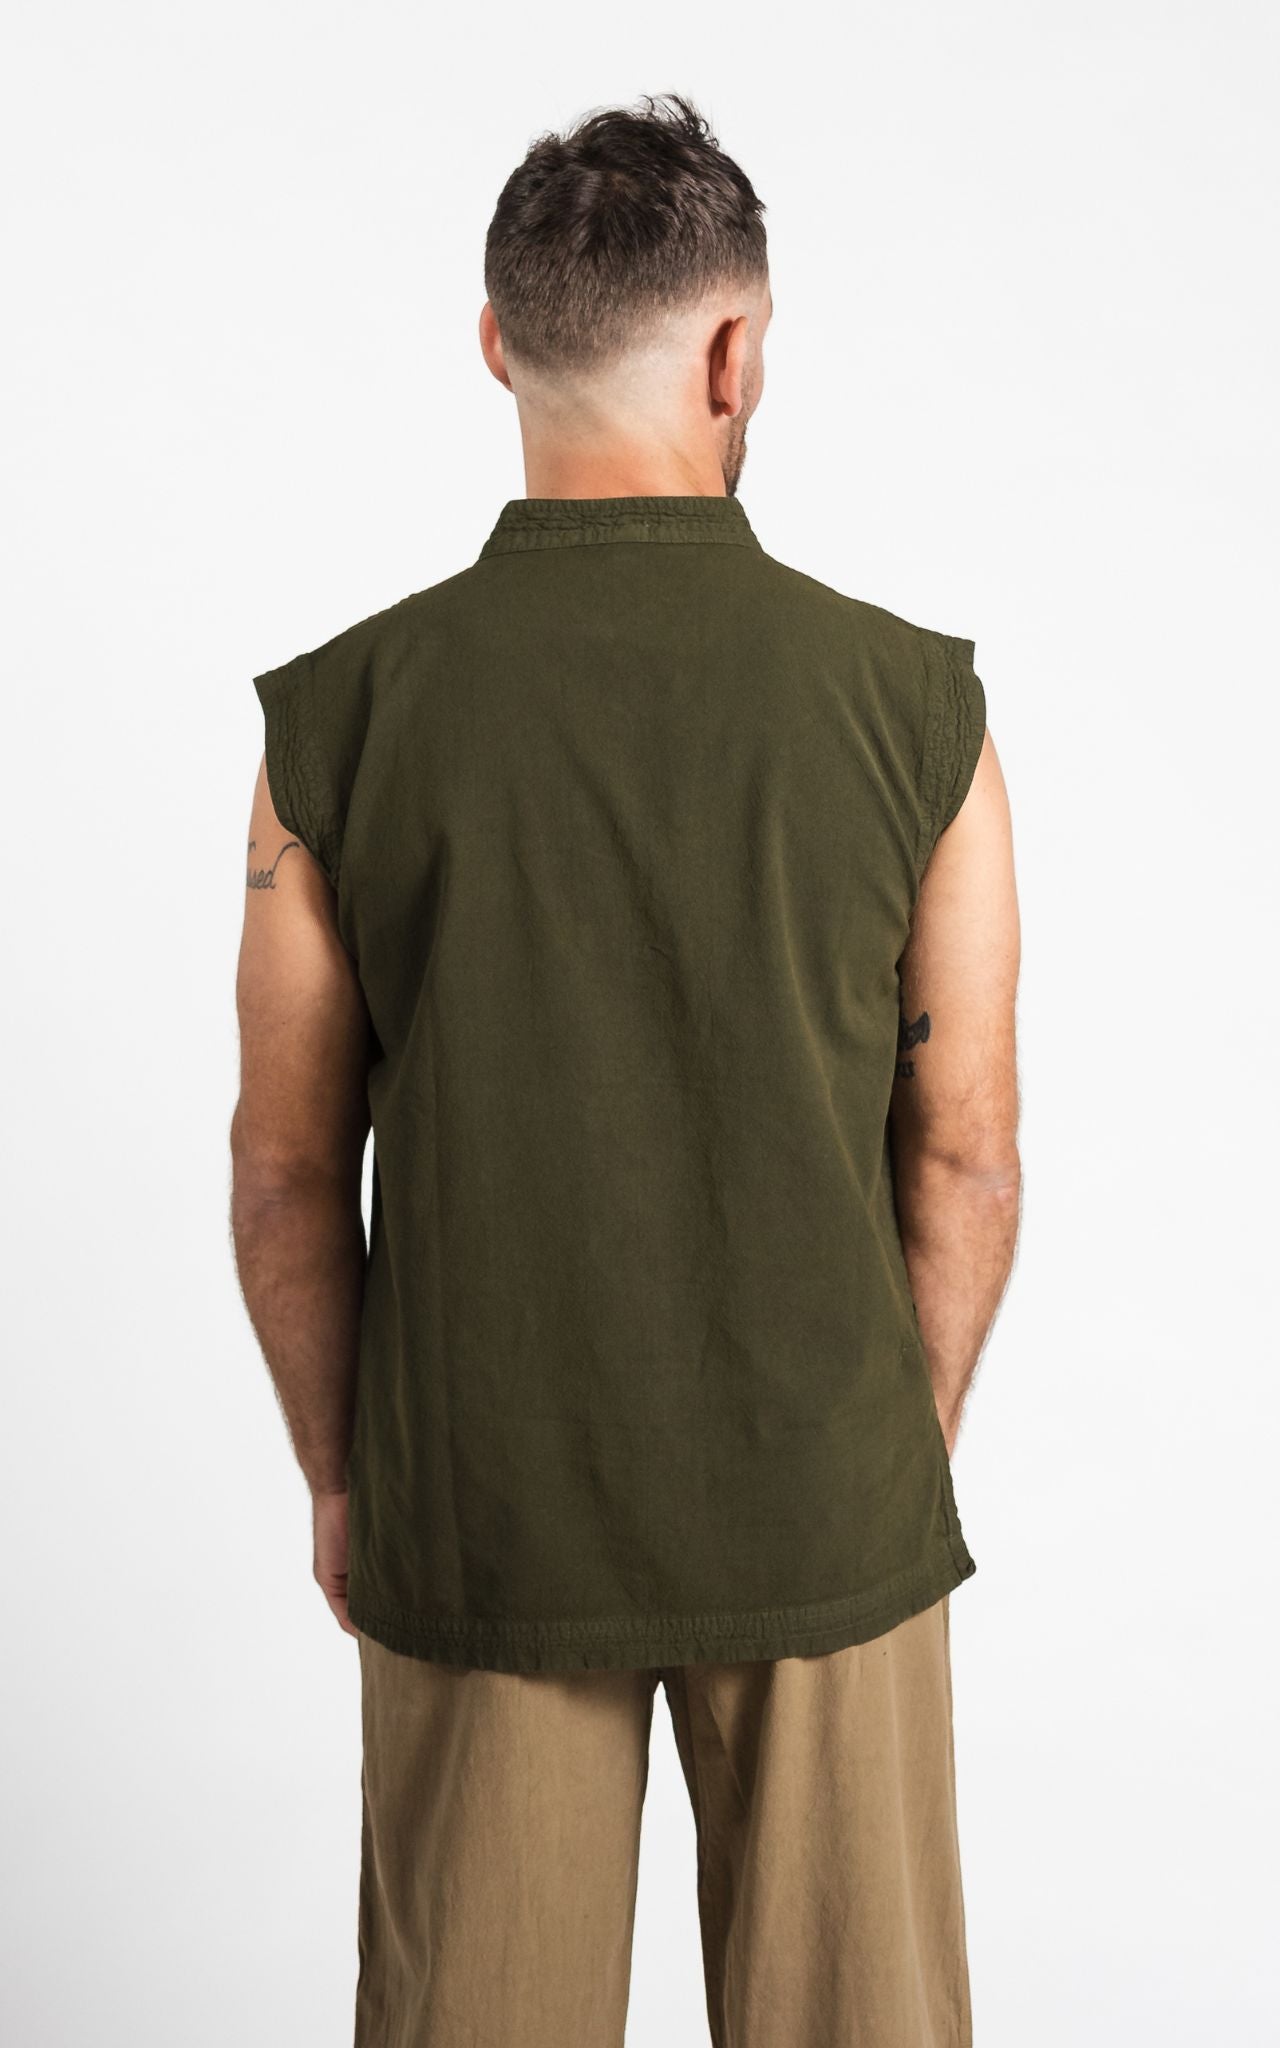 Surya Australia Ethical Cotton 'Lhasa' Shirt for men made in Nepal - Green